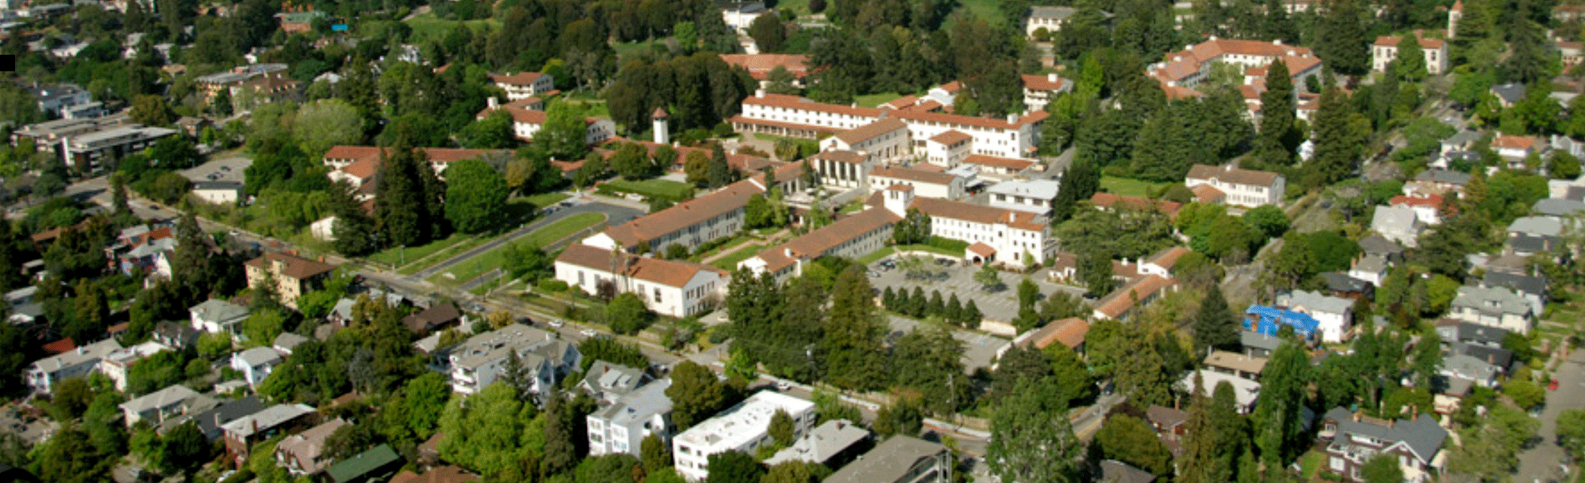 aerial view of clark kerr campus, UC Berkeley